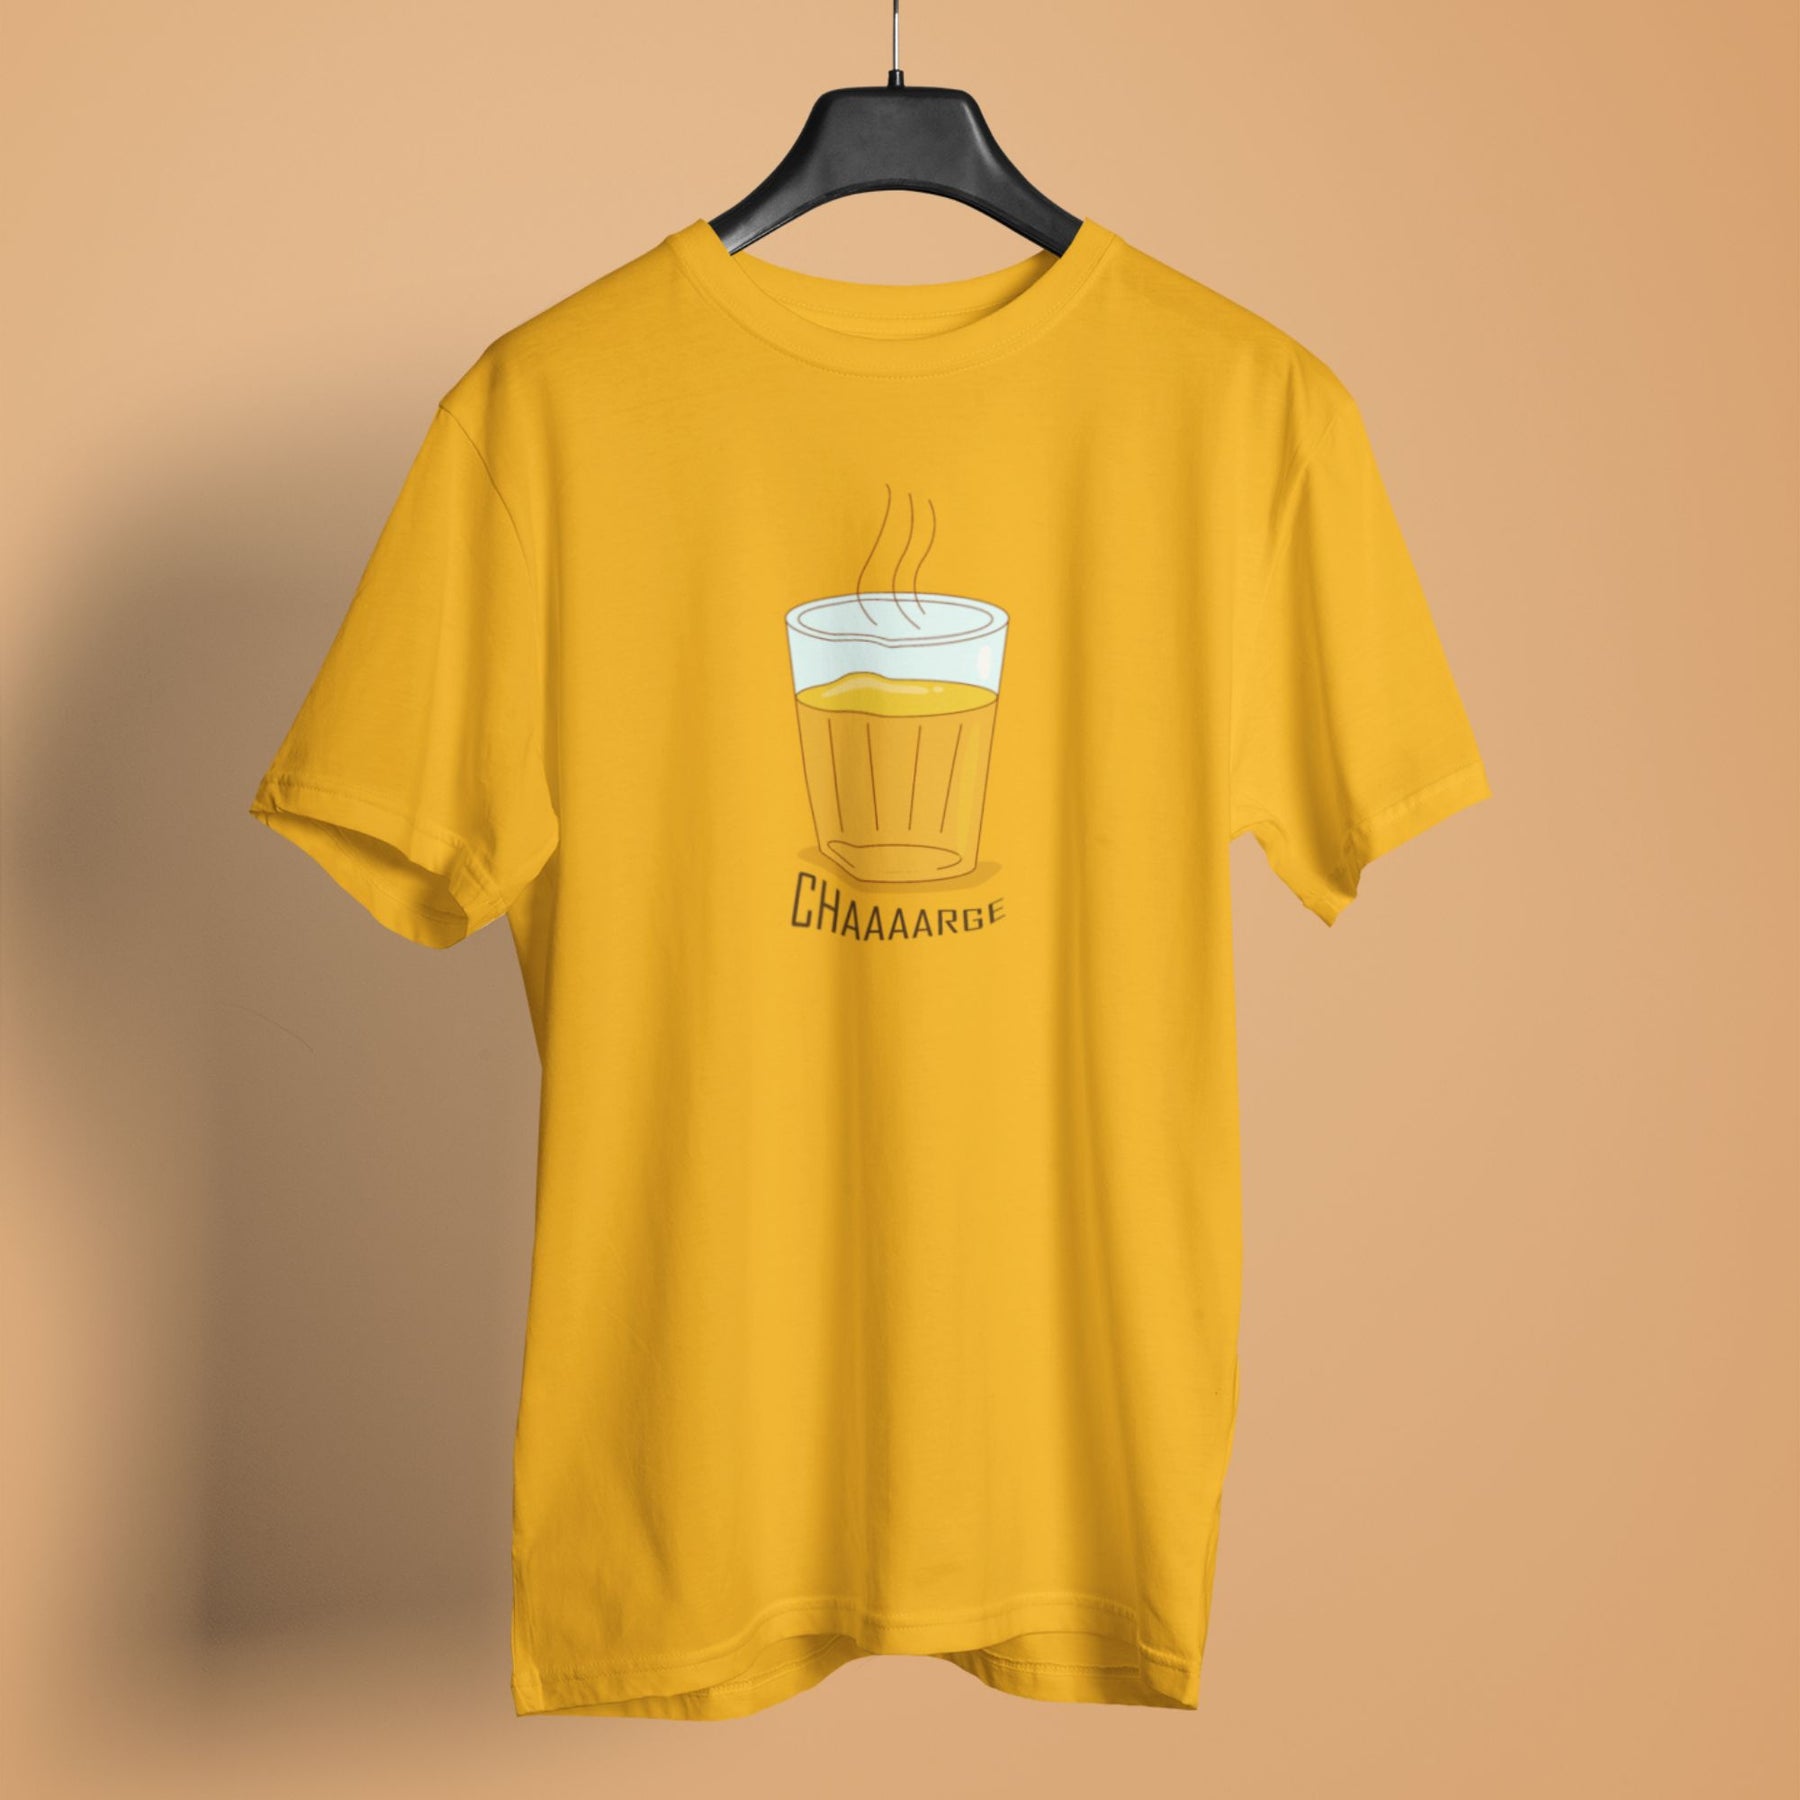 charge-yellow-t-shirt-half-sleeve-t-shirt-men-s-graphic-t-shirts